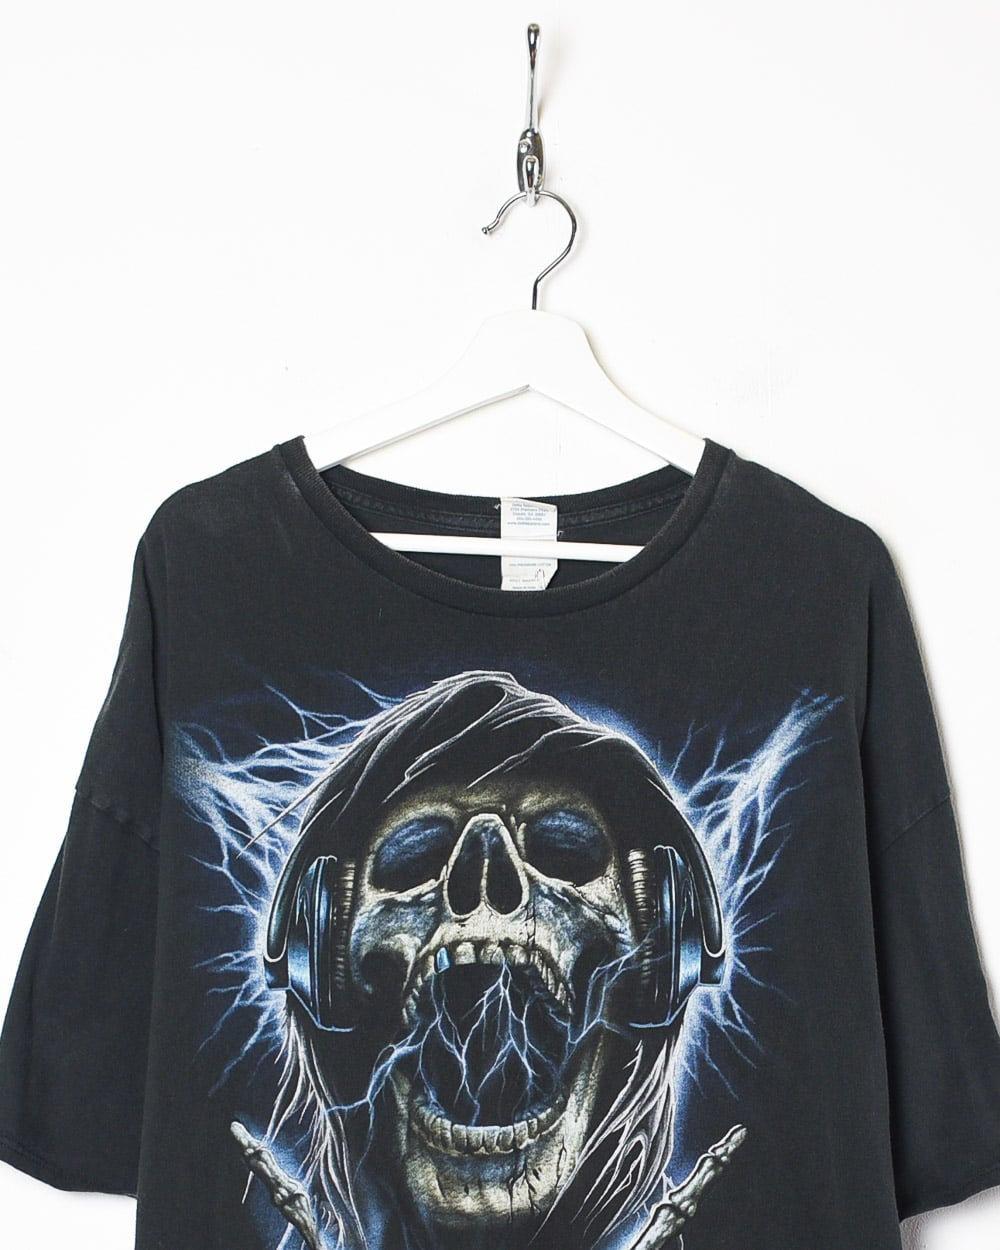 Black Skull Graphic T-Shirt - XX-Large